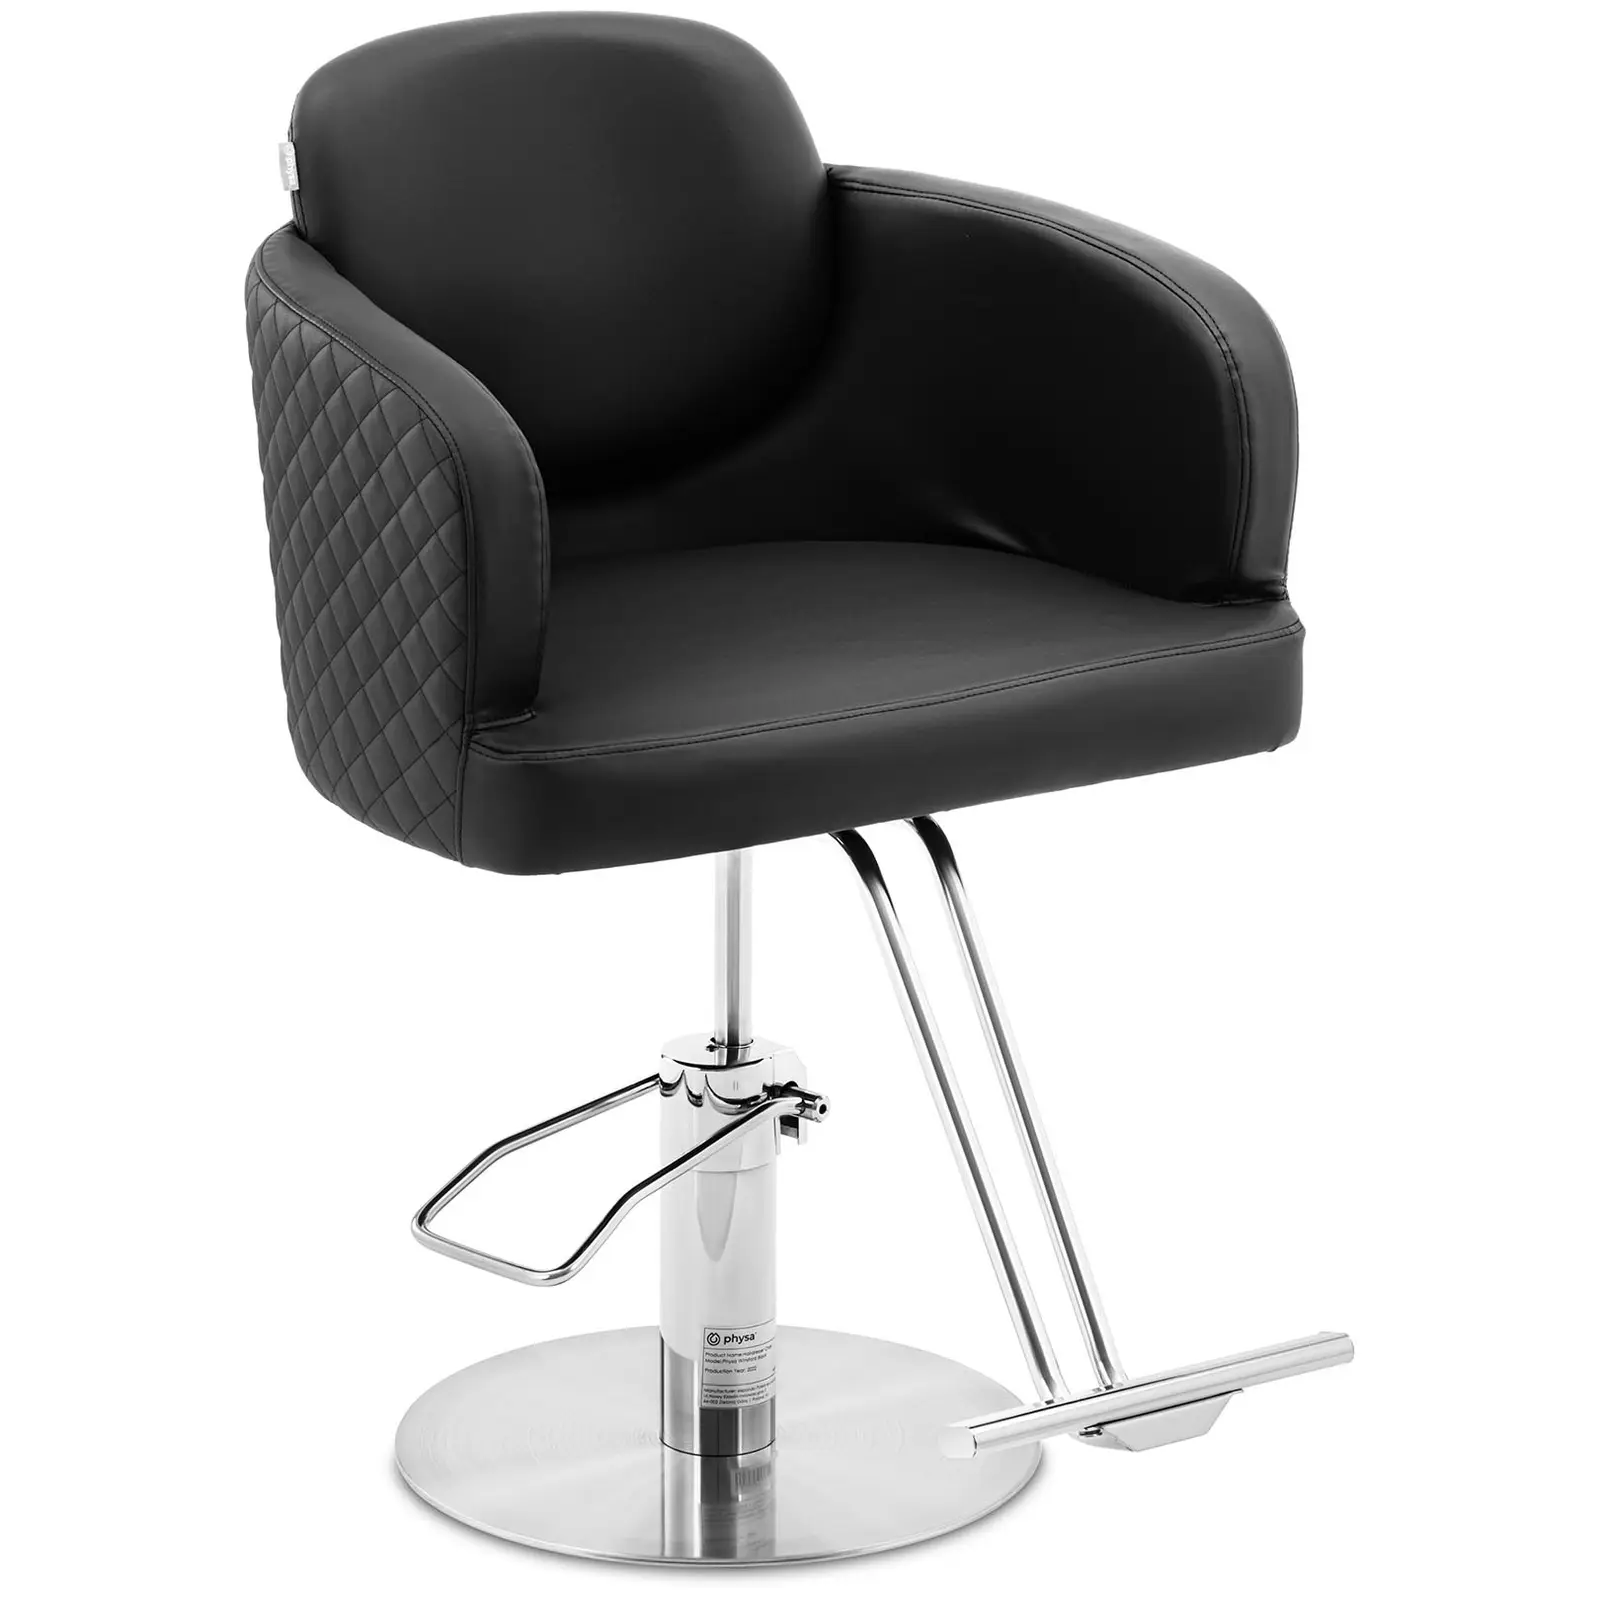 Salonska stolica s osloncem za noge - Winsford Black